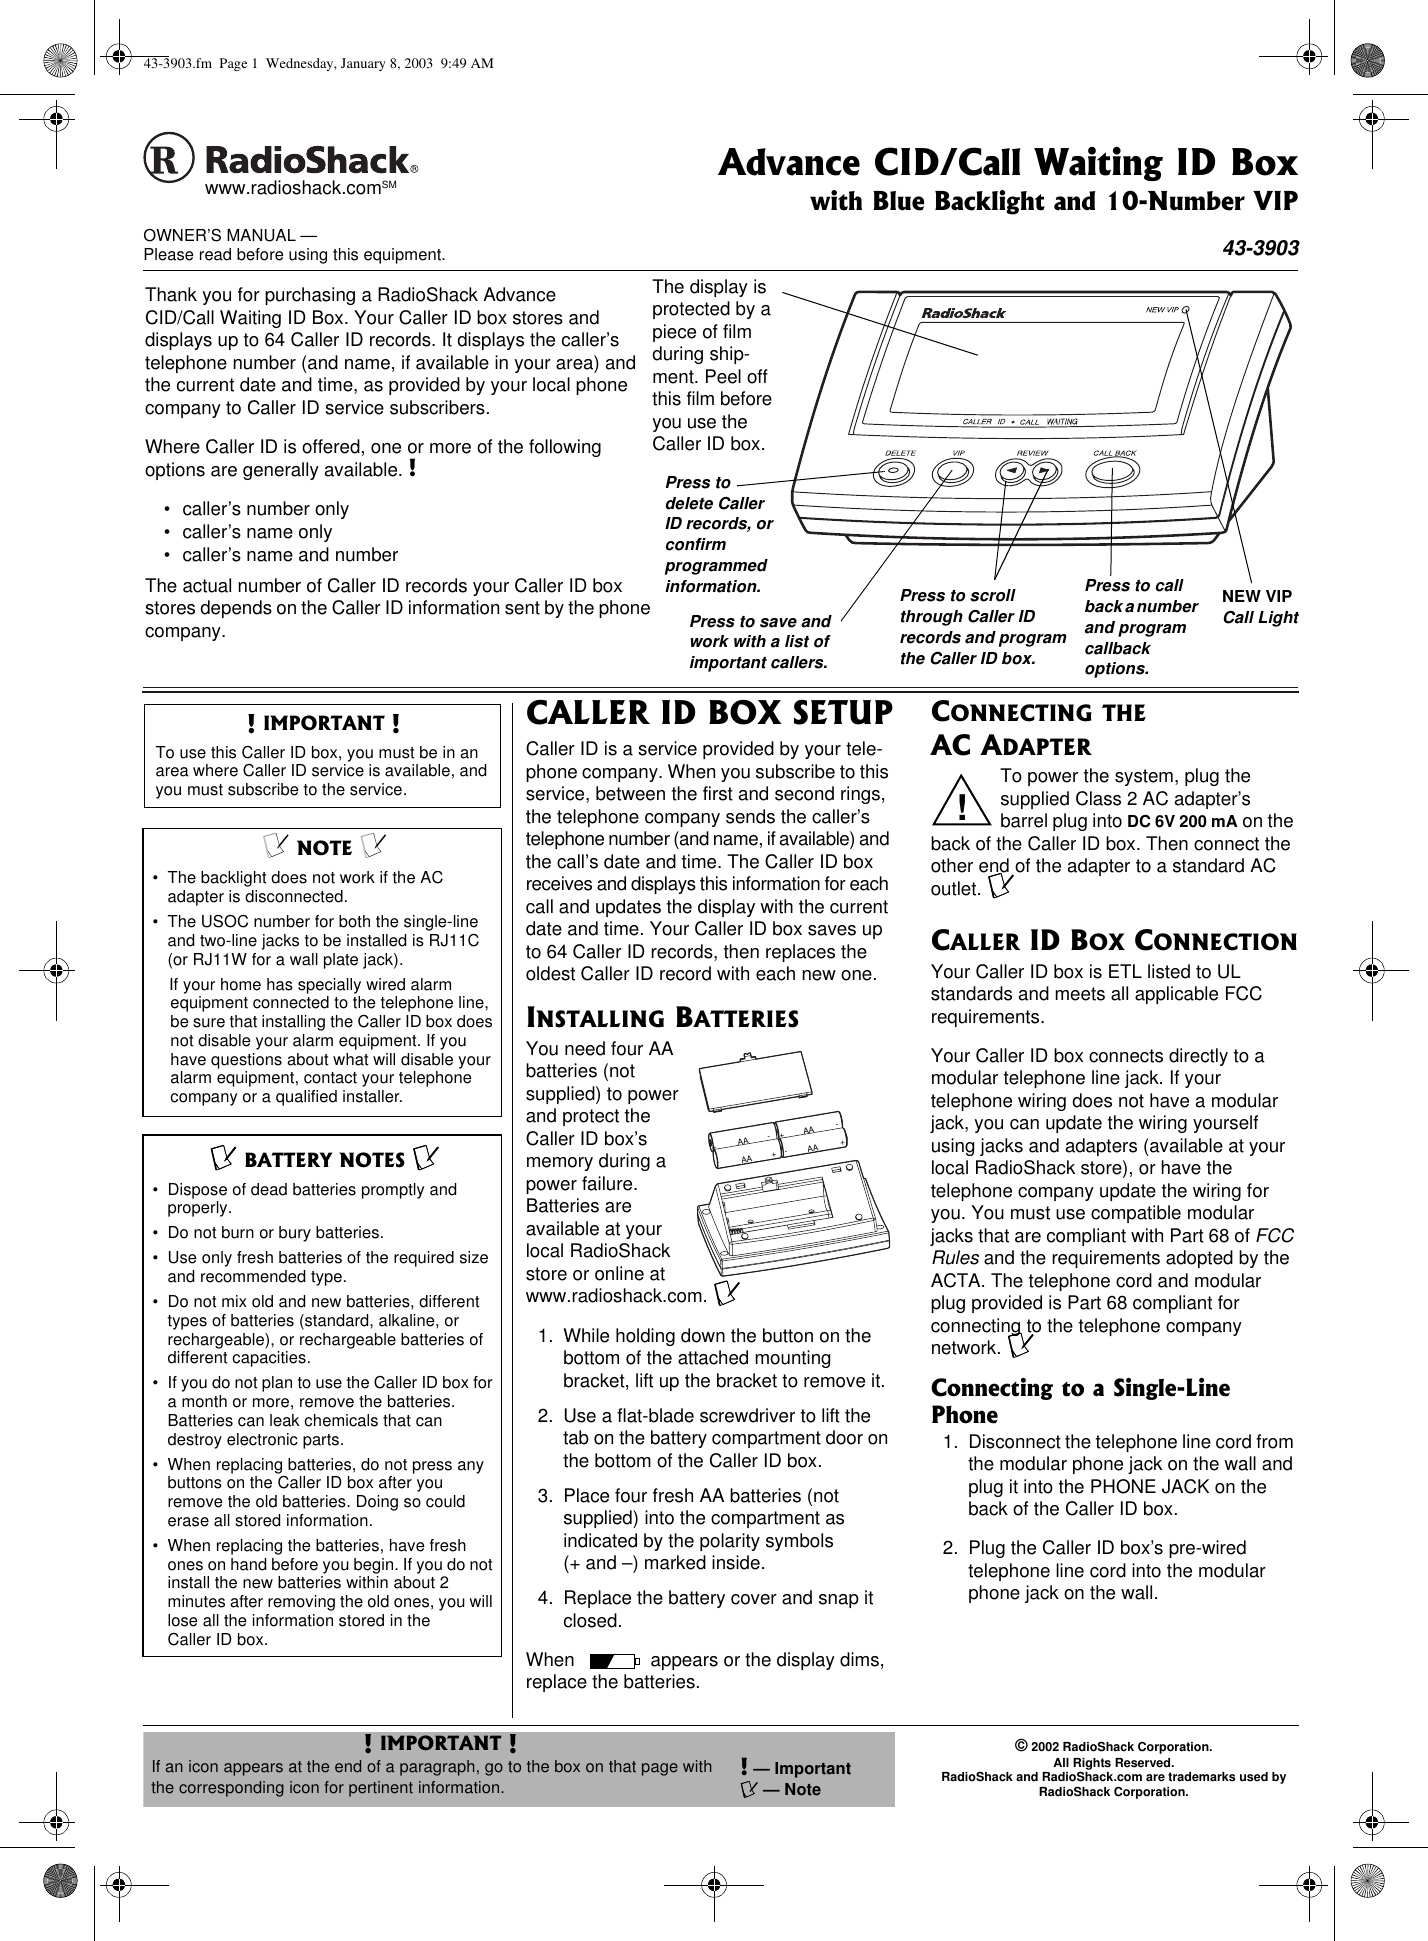 Page 1 of 4 - Radio-Shack Radio-Shack-43-3903-Users-Manual- 43-3903  Radio-shack-43-3903-users-manual